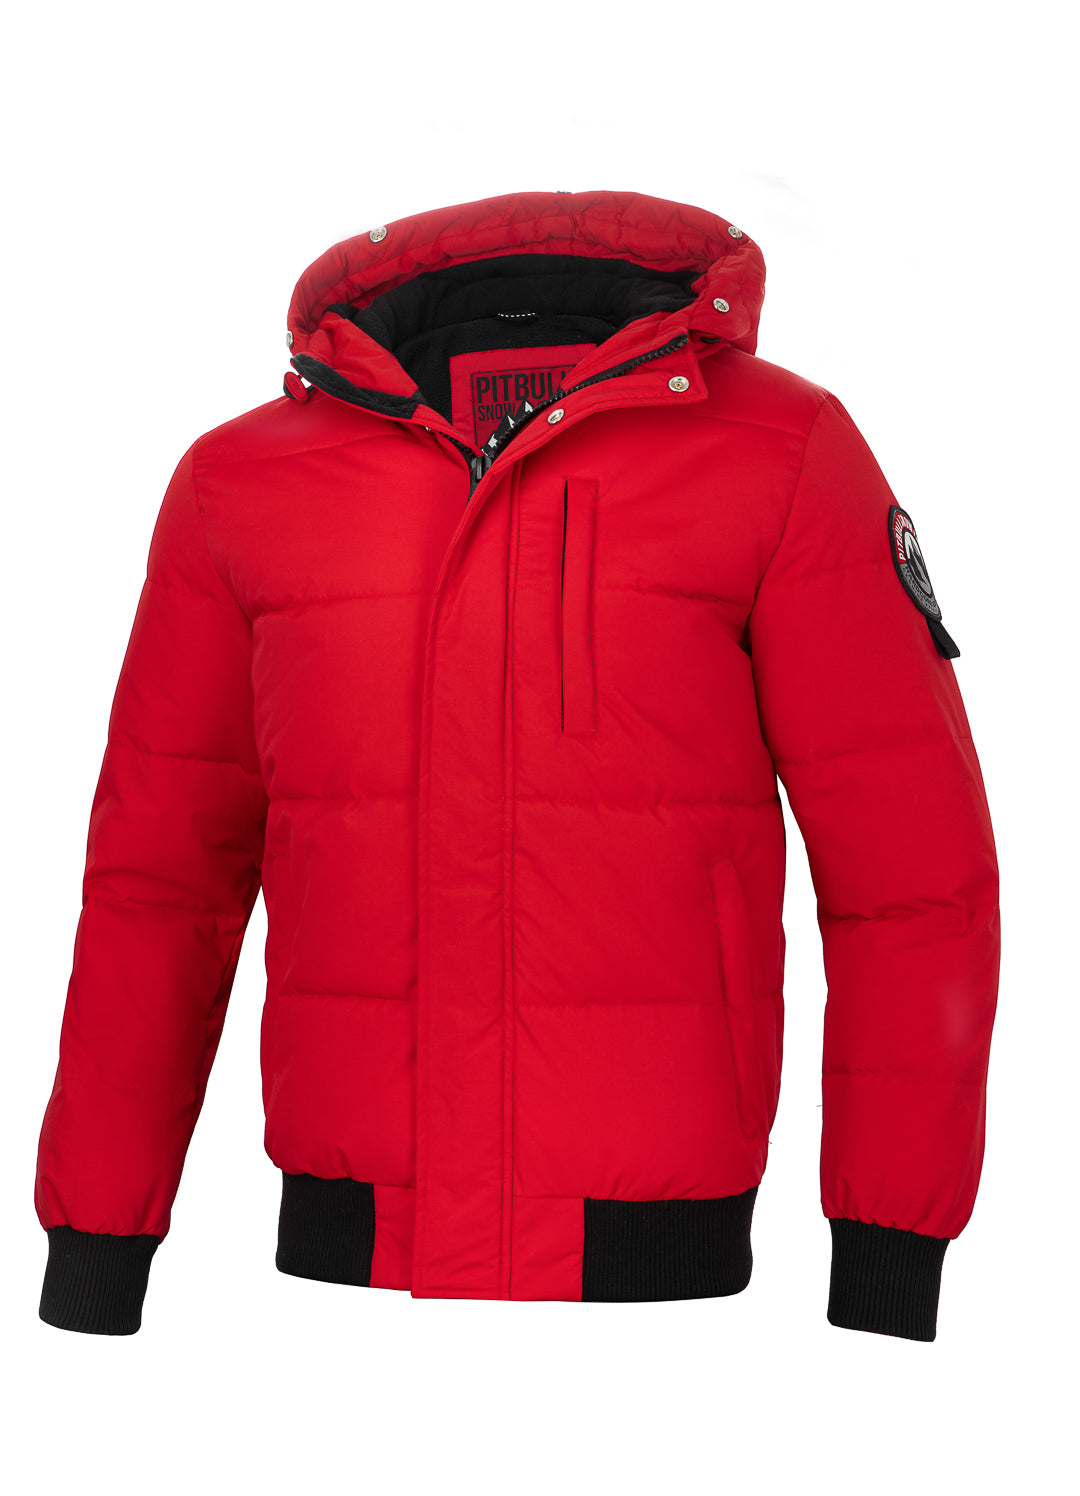 NEWPORT Red Winter Jacket - Pitbull West Coast International Store 